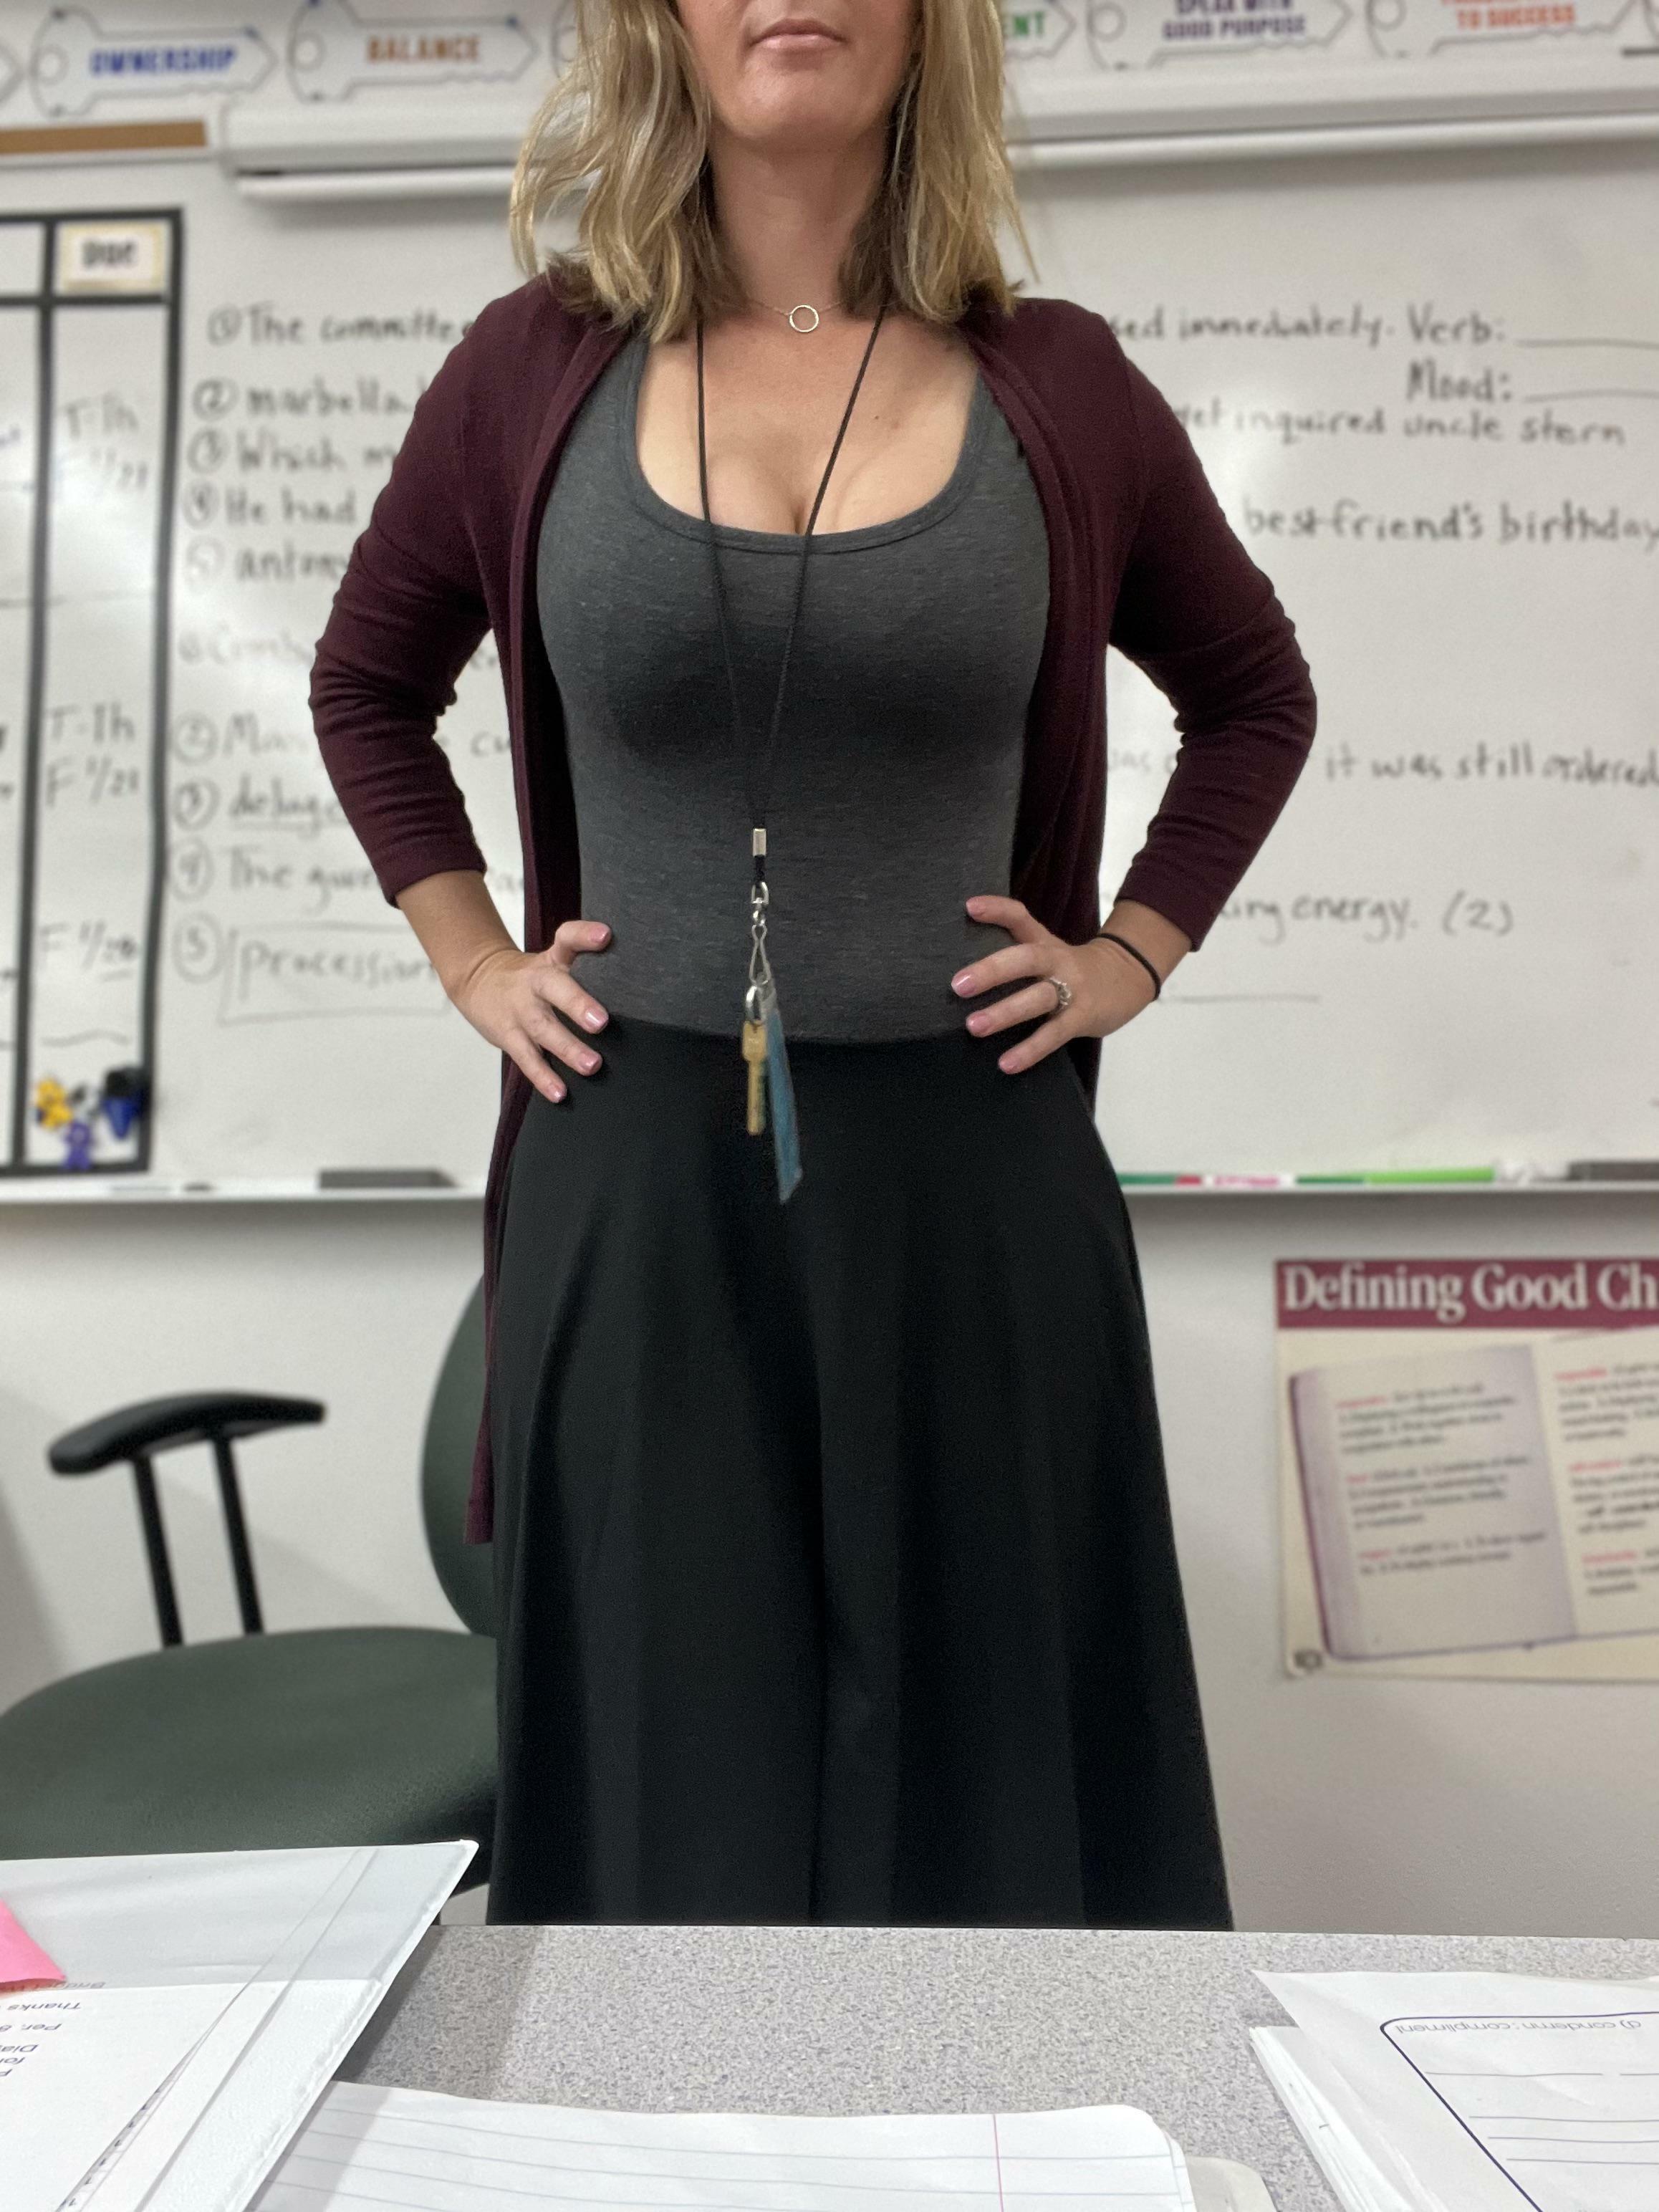 Teacher cleavage